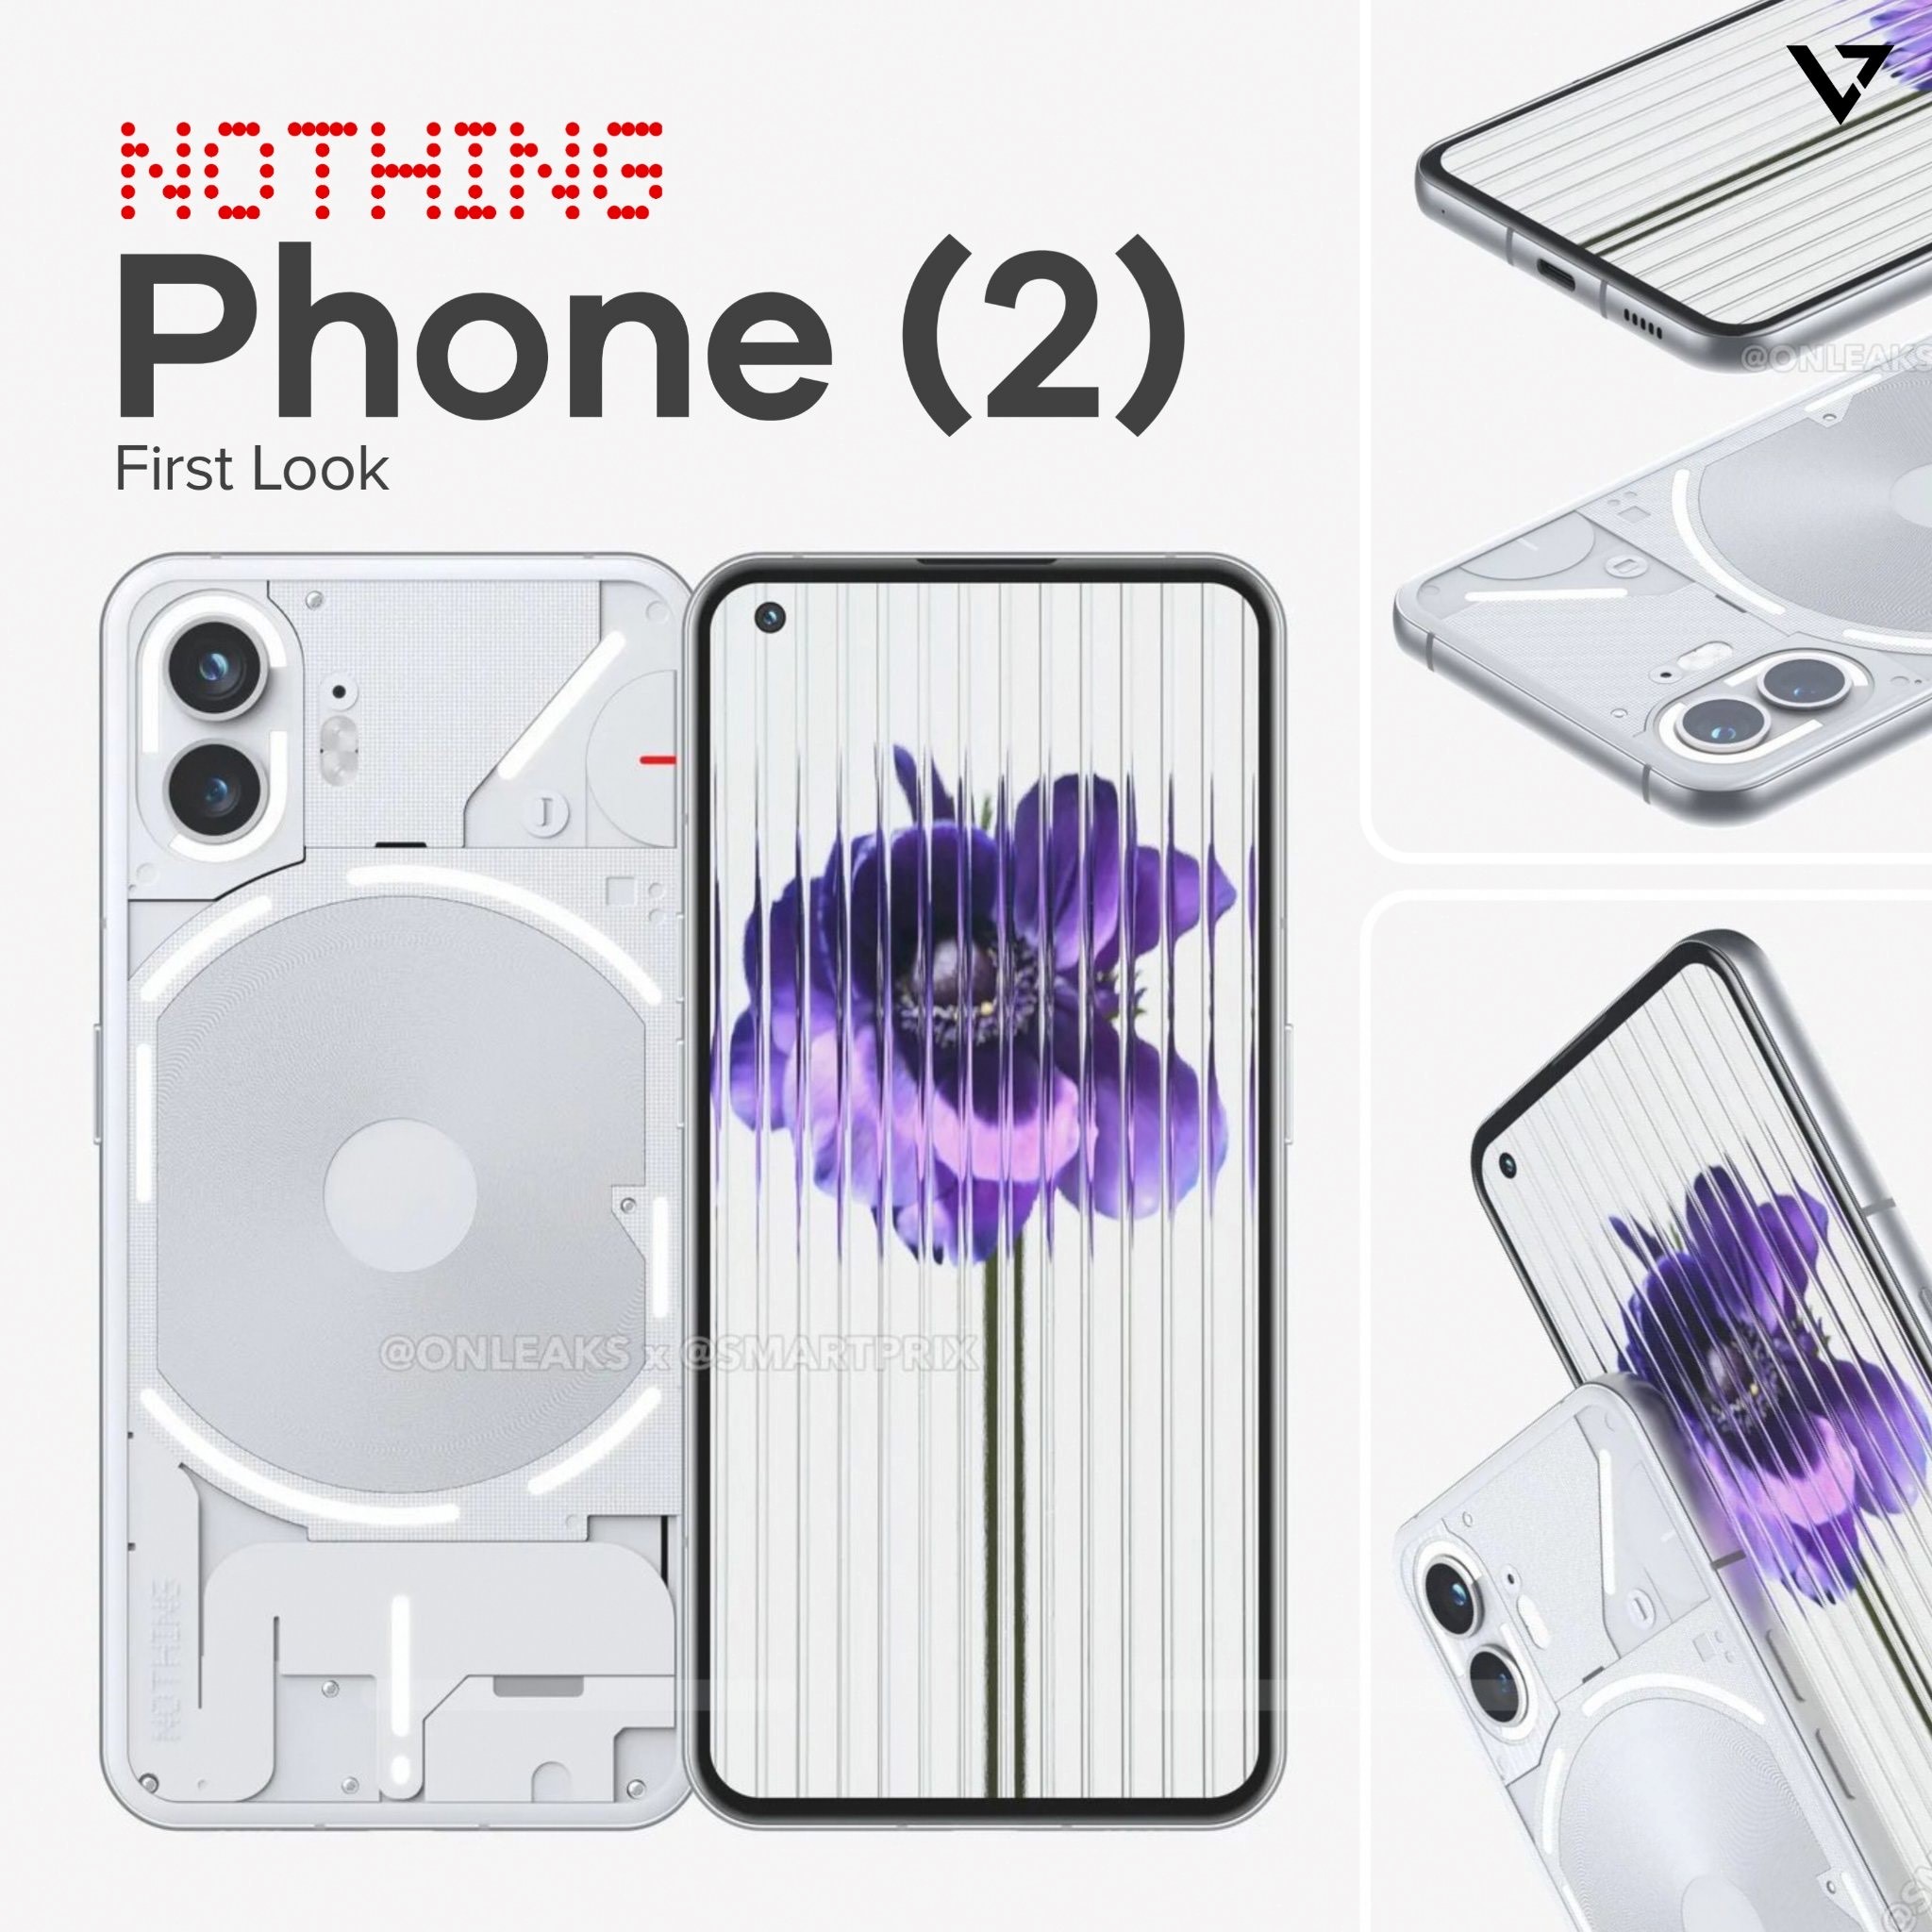 Nothing Phone (2)